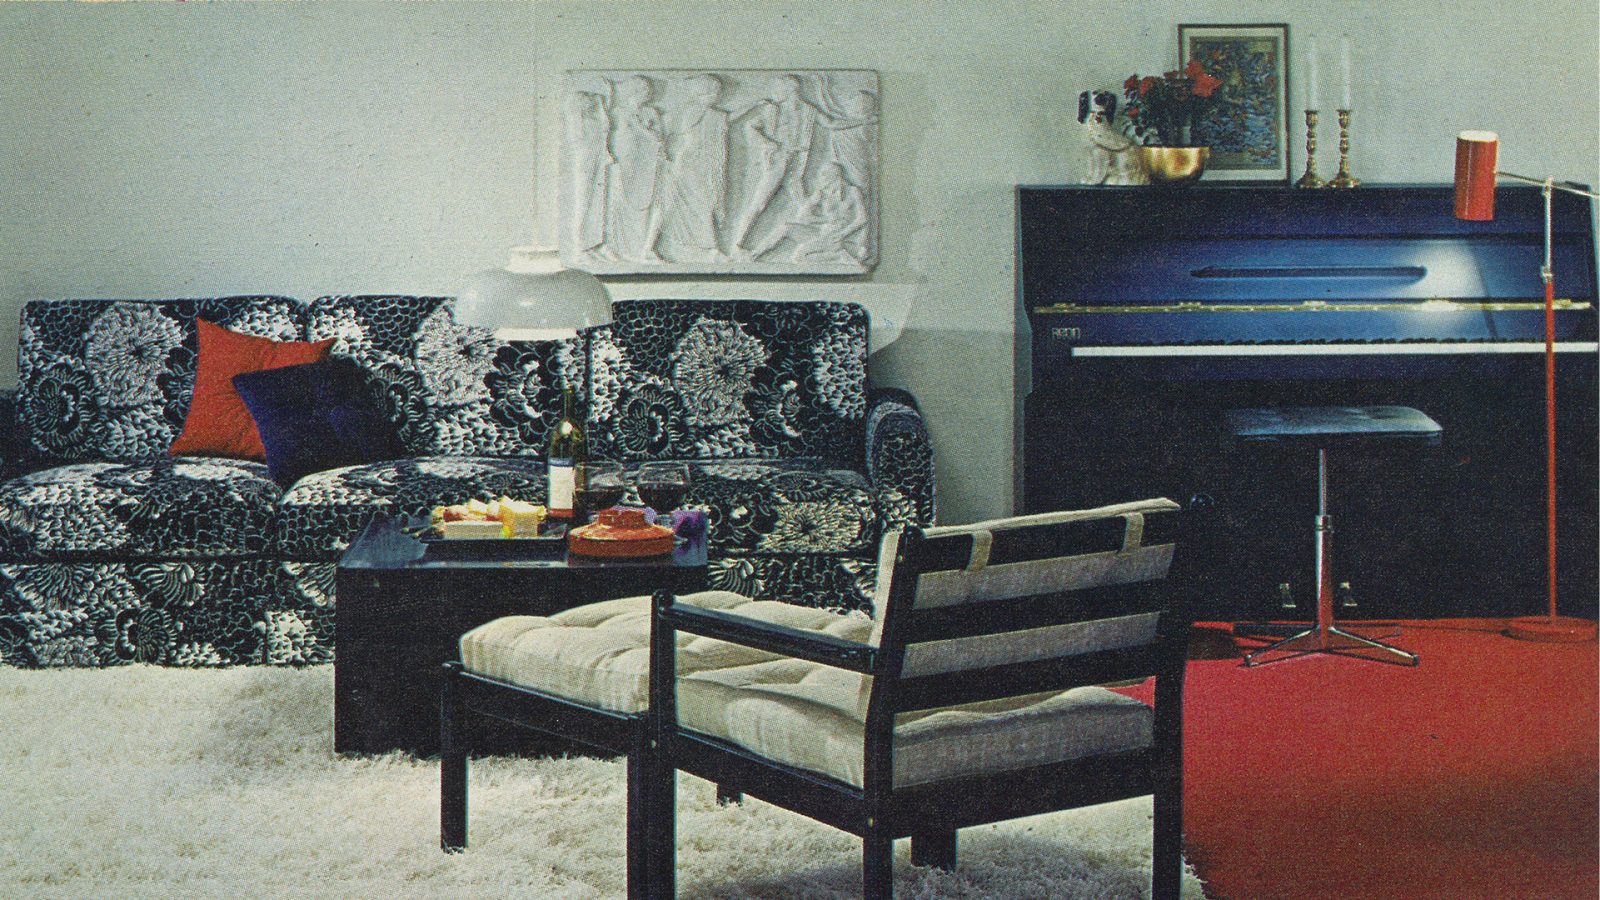 1970s interior with black and white furniture, white rya rug, and dark blue piano.